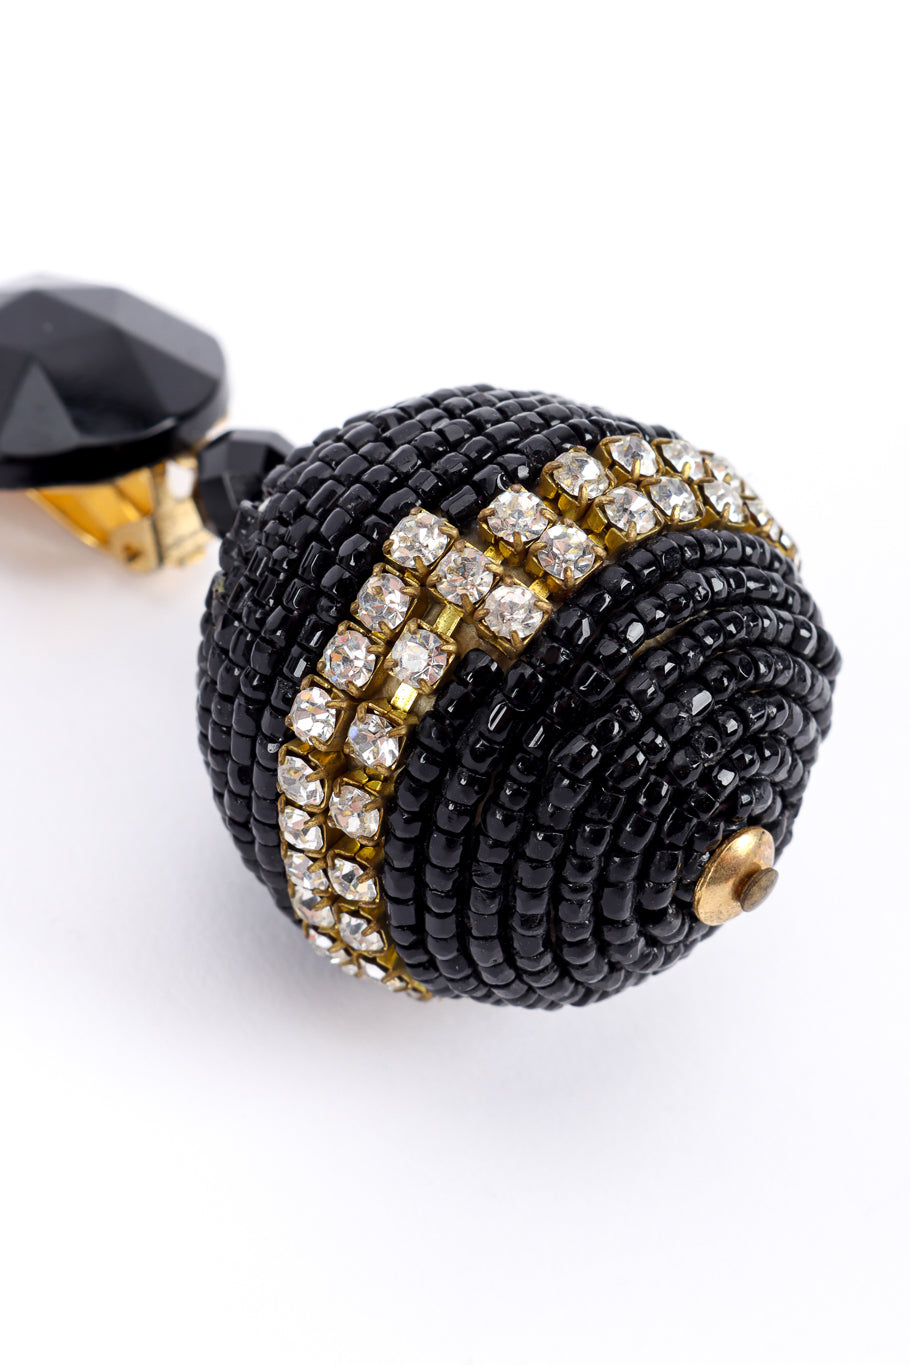 Crystal & Bead Ball Drop Earrings by Unger rhinestones close @recessla